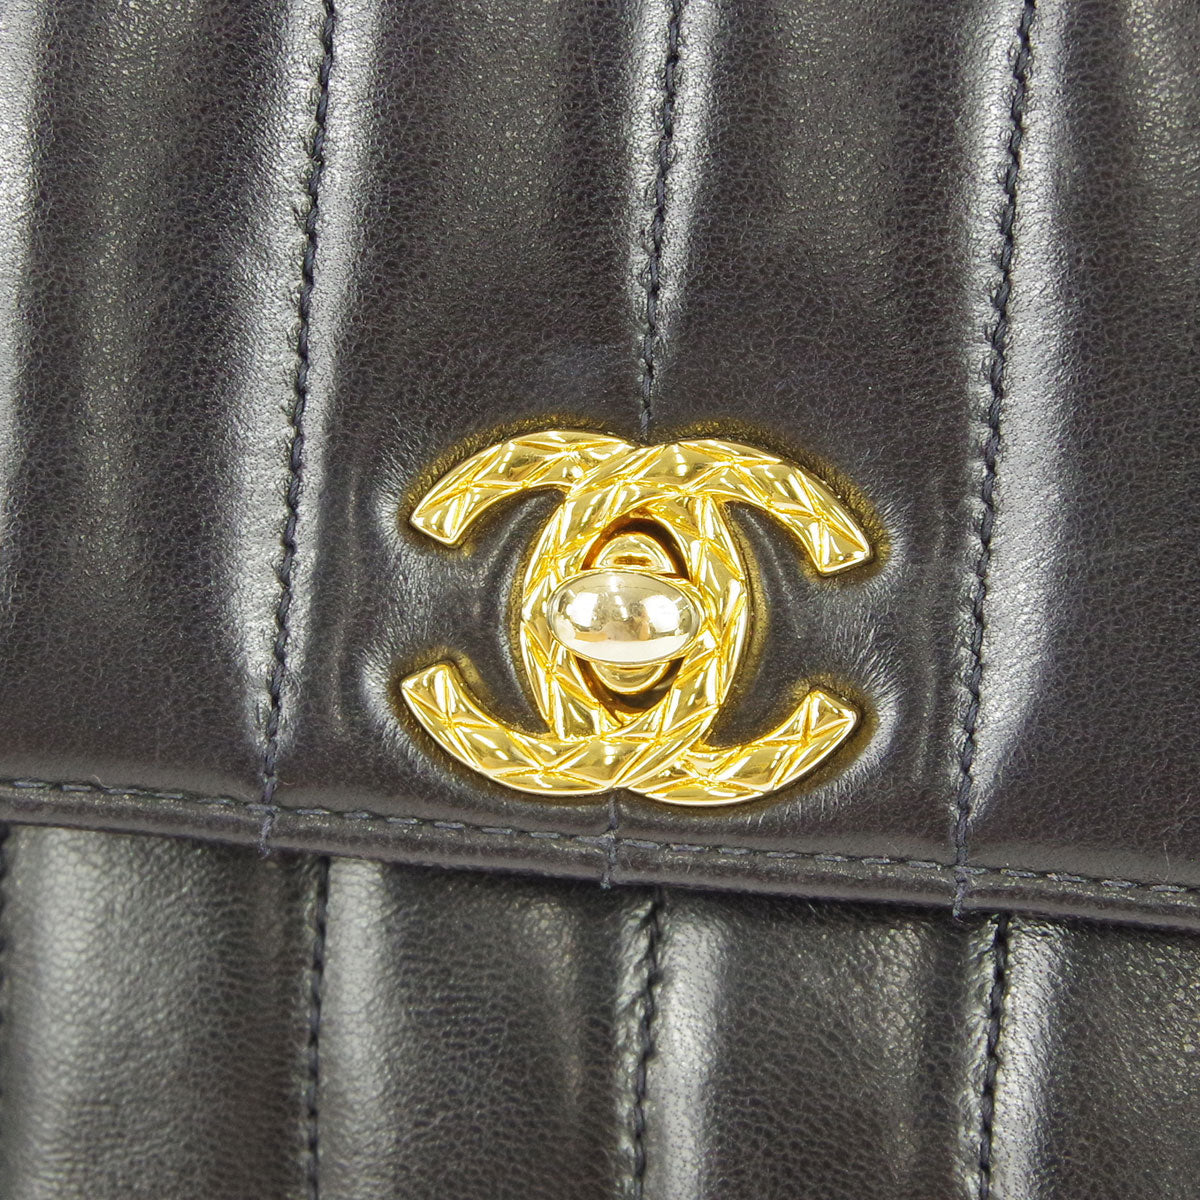 Chanel 1991-1994 Lambskin Vertical Stitch Flap Bag